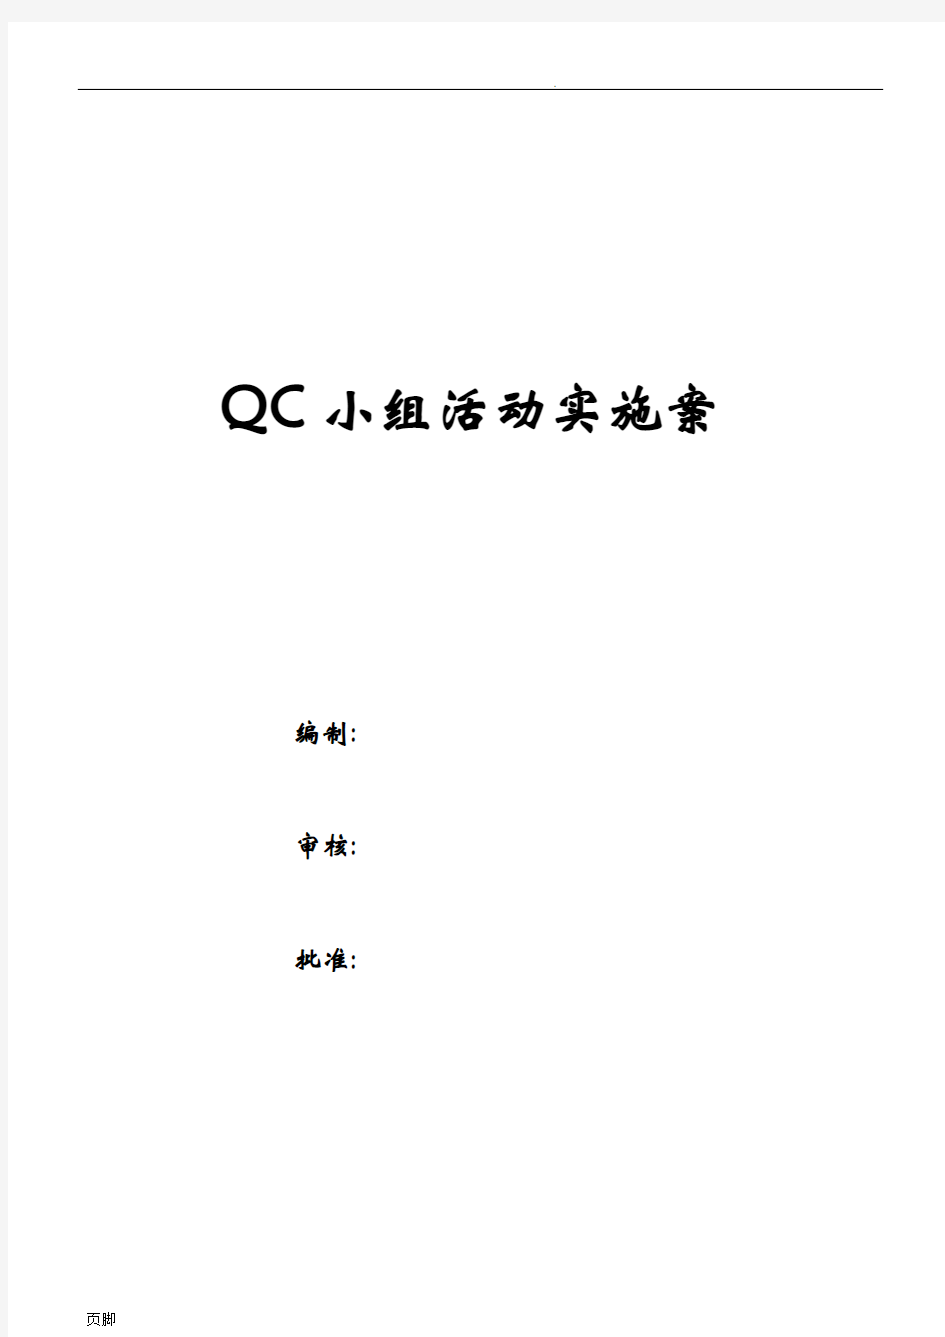 QC小组活动实施方案